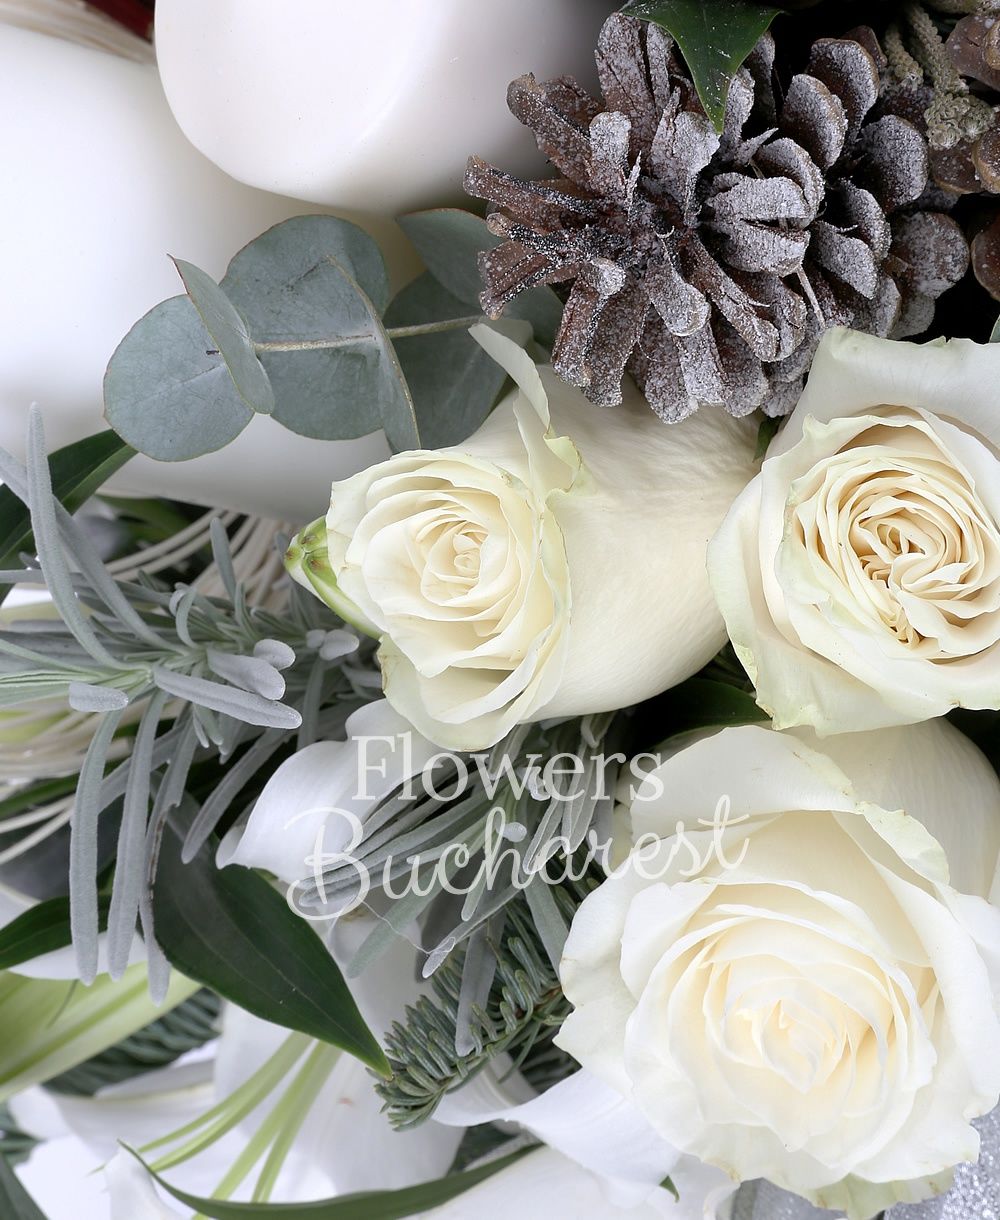 4 white lilies, 3 white roses, 5 brunia, globes, fir, greenery